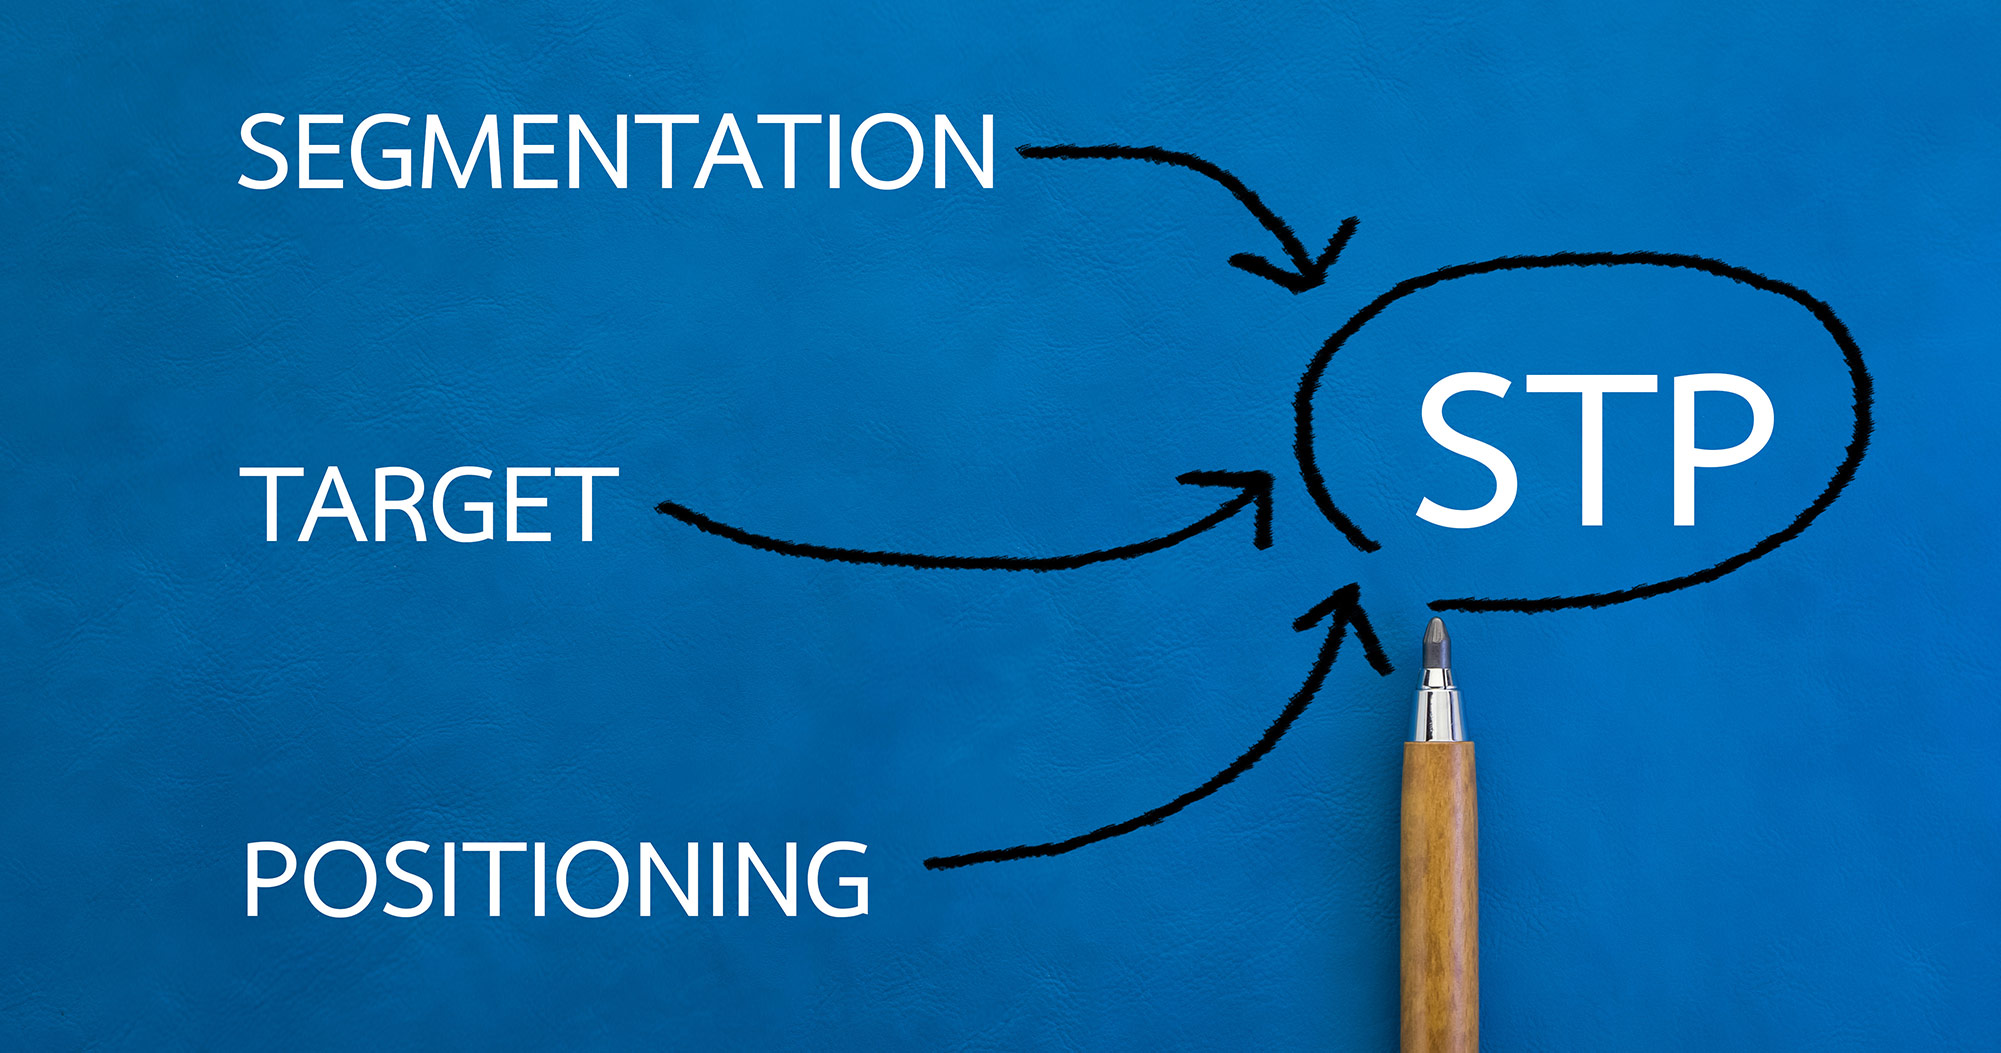 STP Marketing img01 استراتژی STP چیست؟ شاه کلید موفقیت در بازاریابی!!! بازاریابی اینترنتی, راه‌اندازی کسب و کار, مبانی و مفاهیم مدیریت, مدل های بازاریابی, مفاهیم و اصول بازاریابی